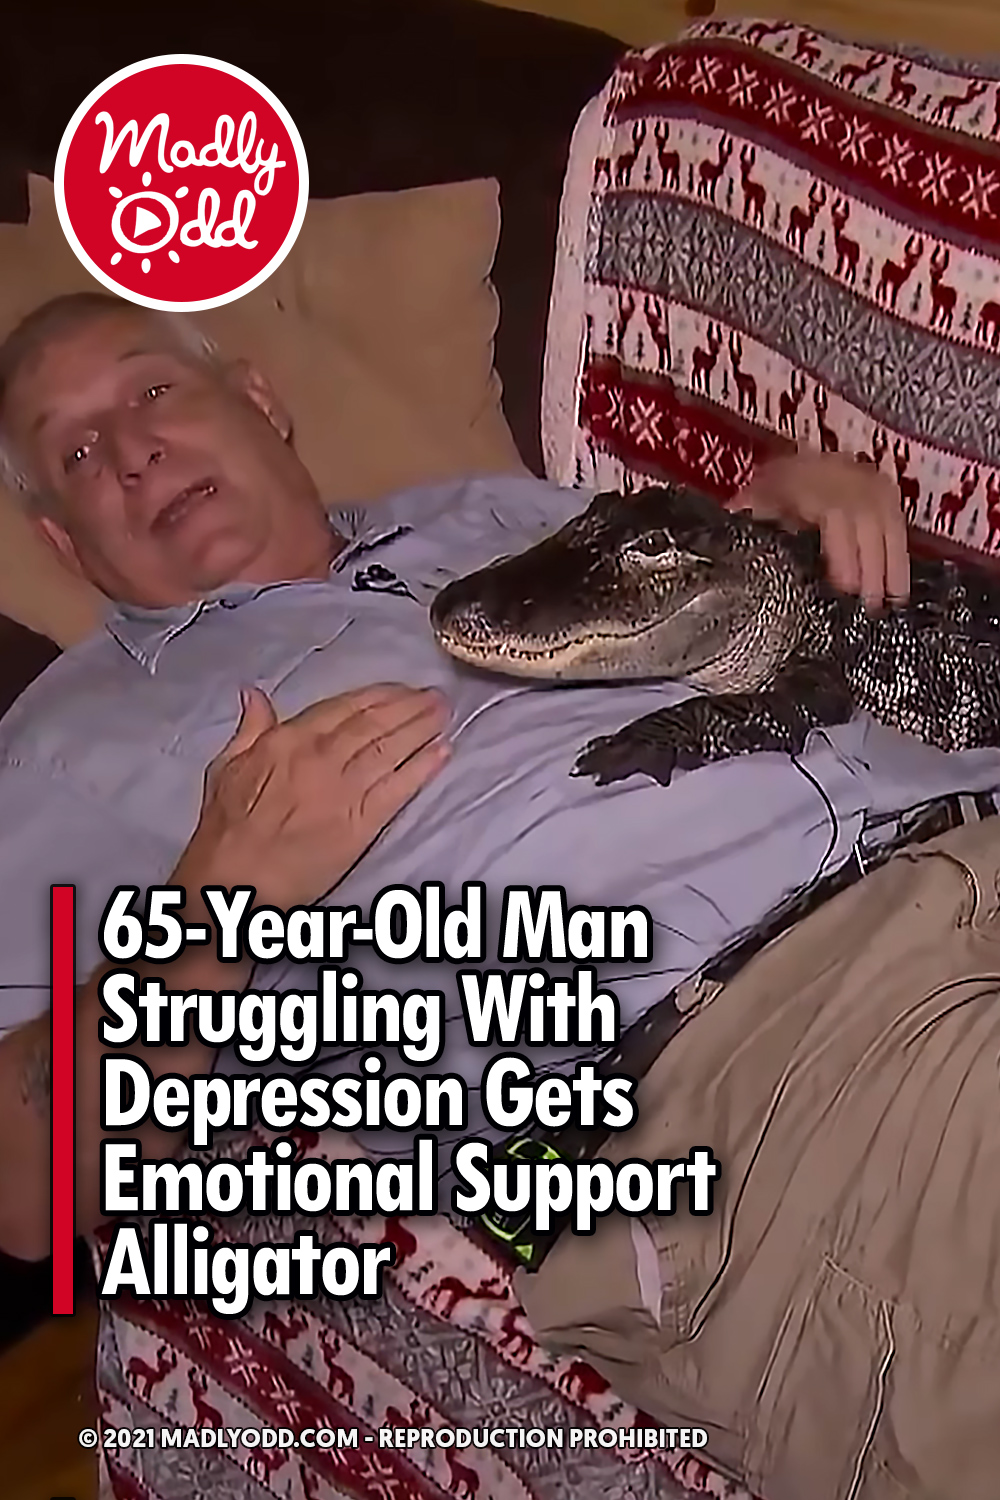 65-Year-Old Man Struggling With Depression Gets Emotional Support Alligator